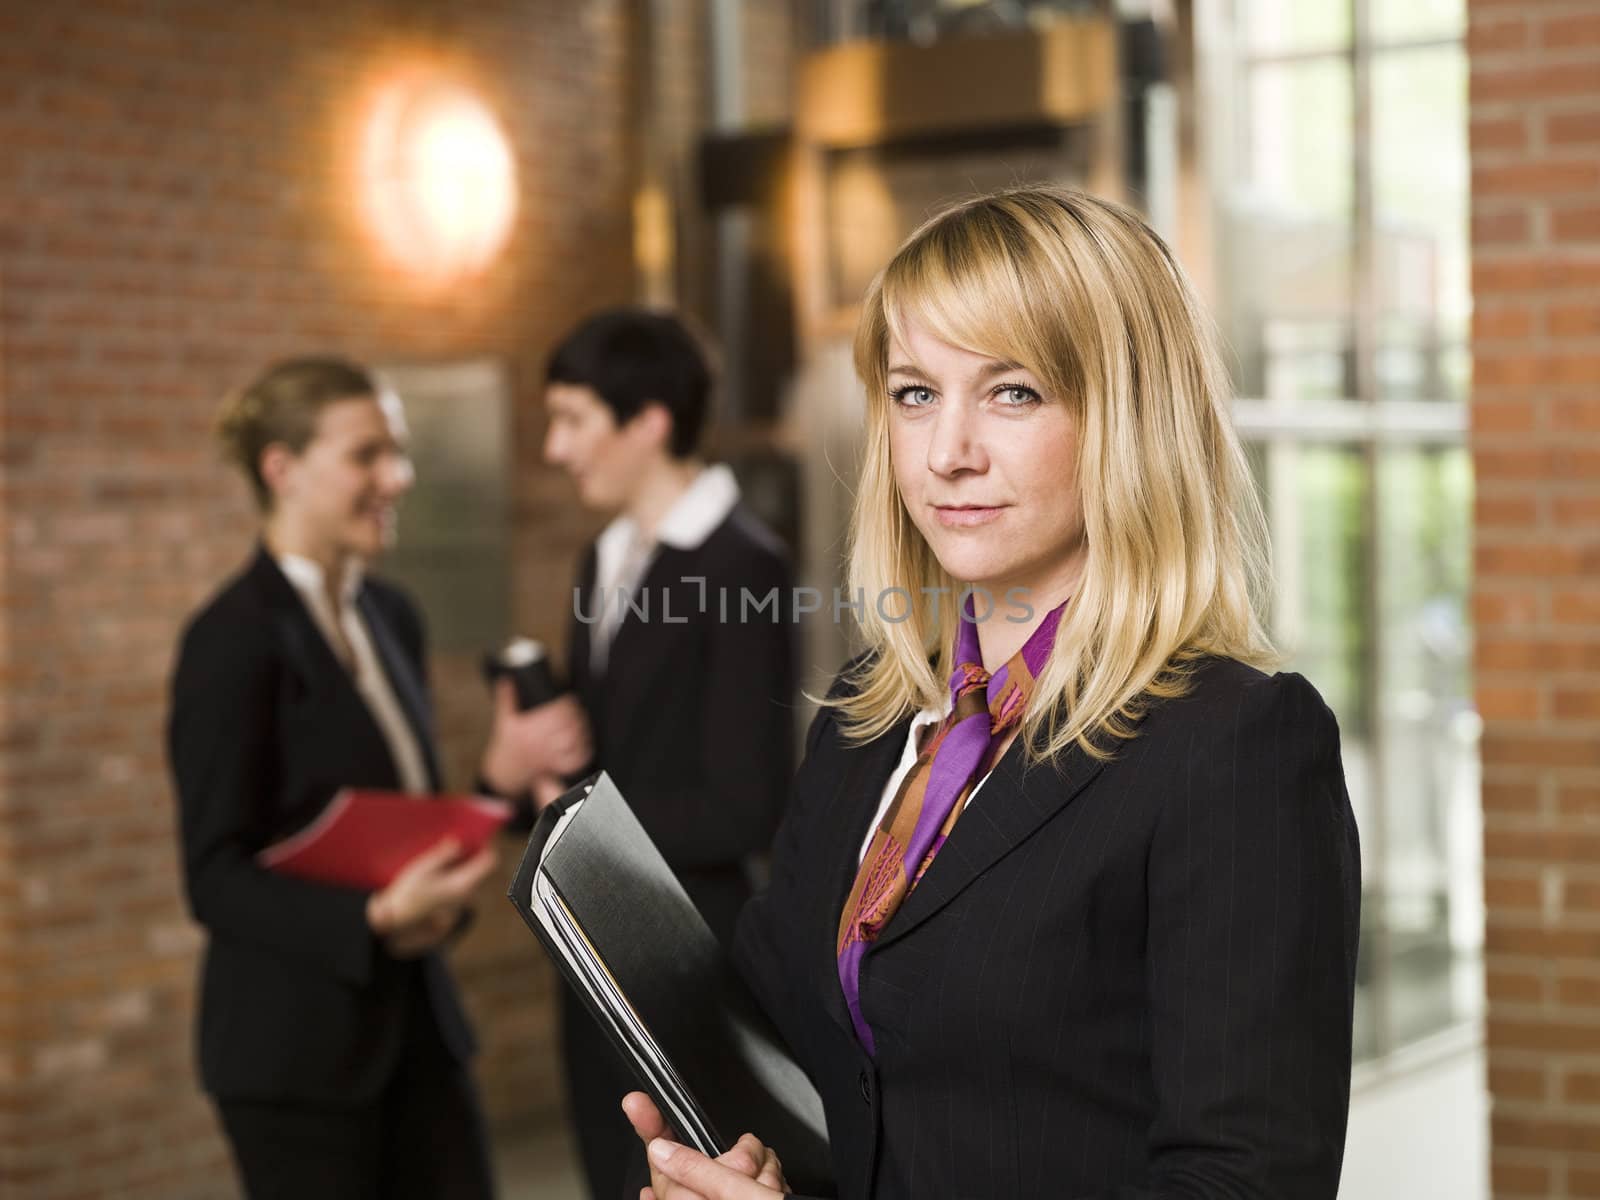 Businesswoman in front of two women by gemenacom